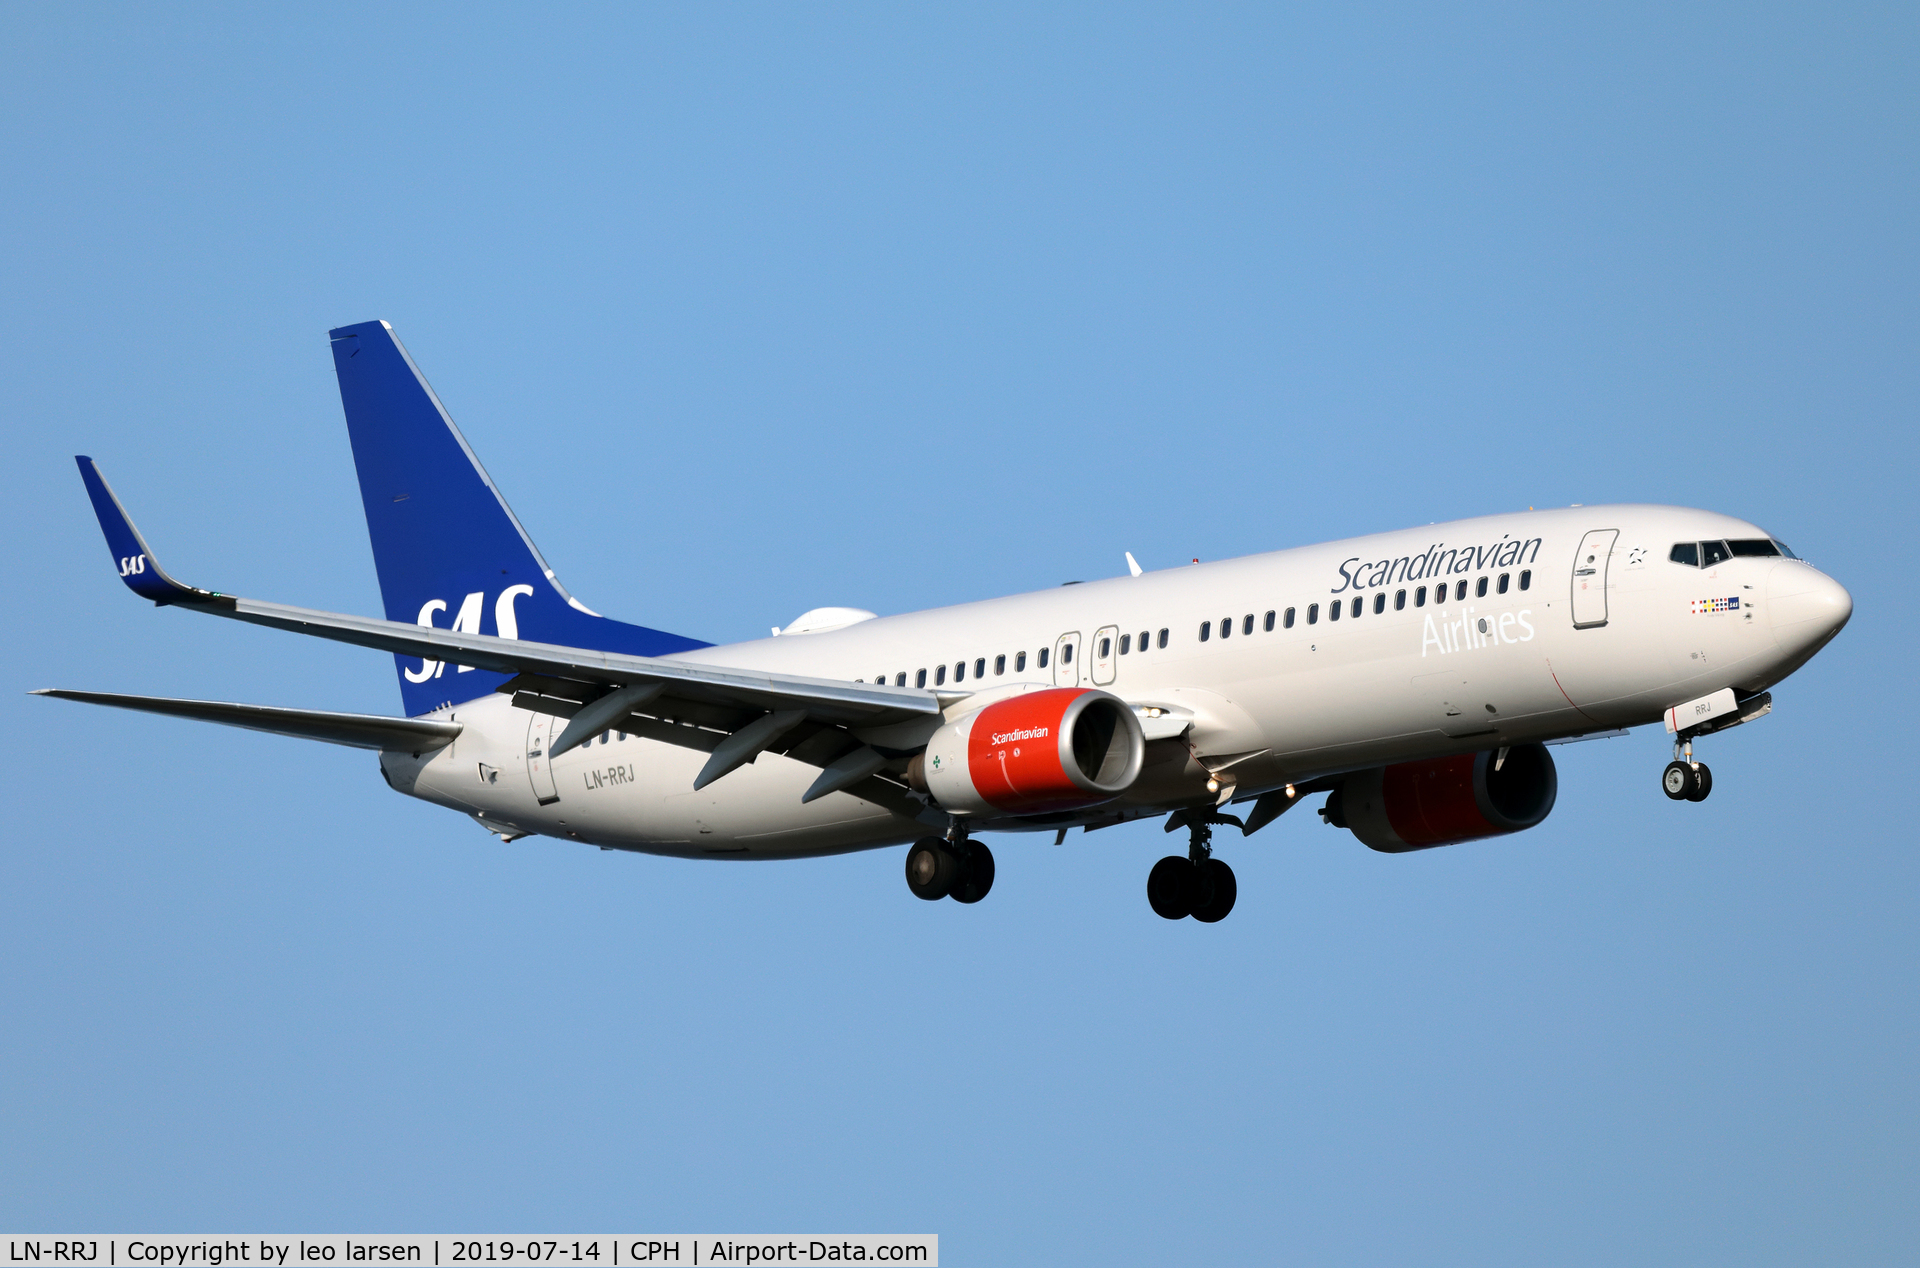 LN-RRJ, 2009 Boeing 737-883 C/N 34547, Copenhagen 14.7.2019 L/D R-22L